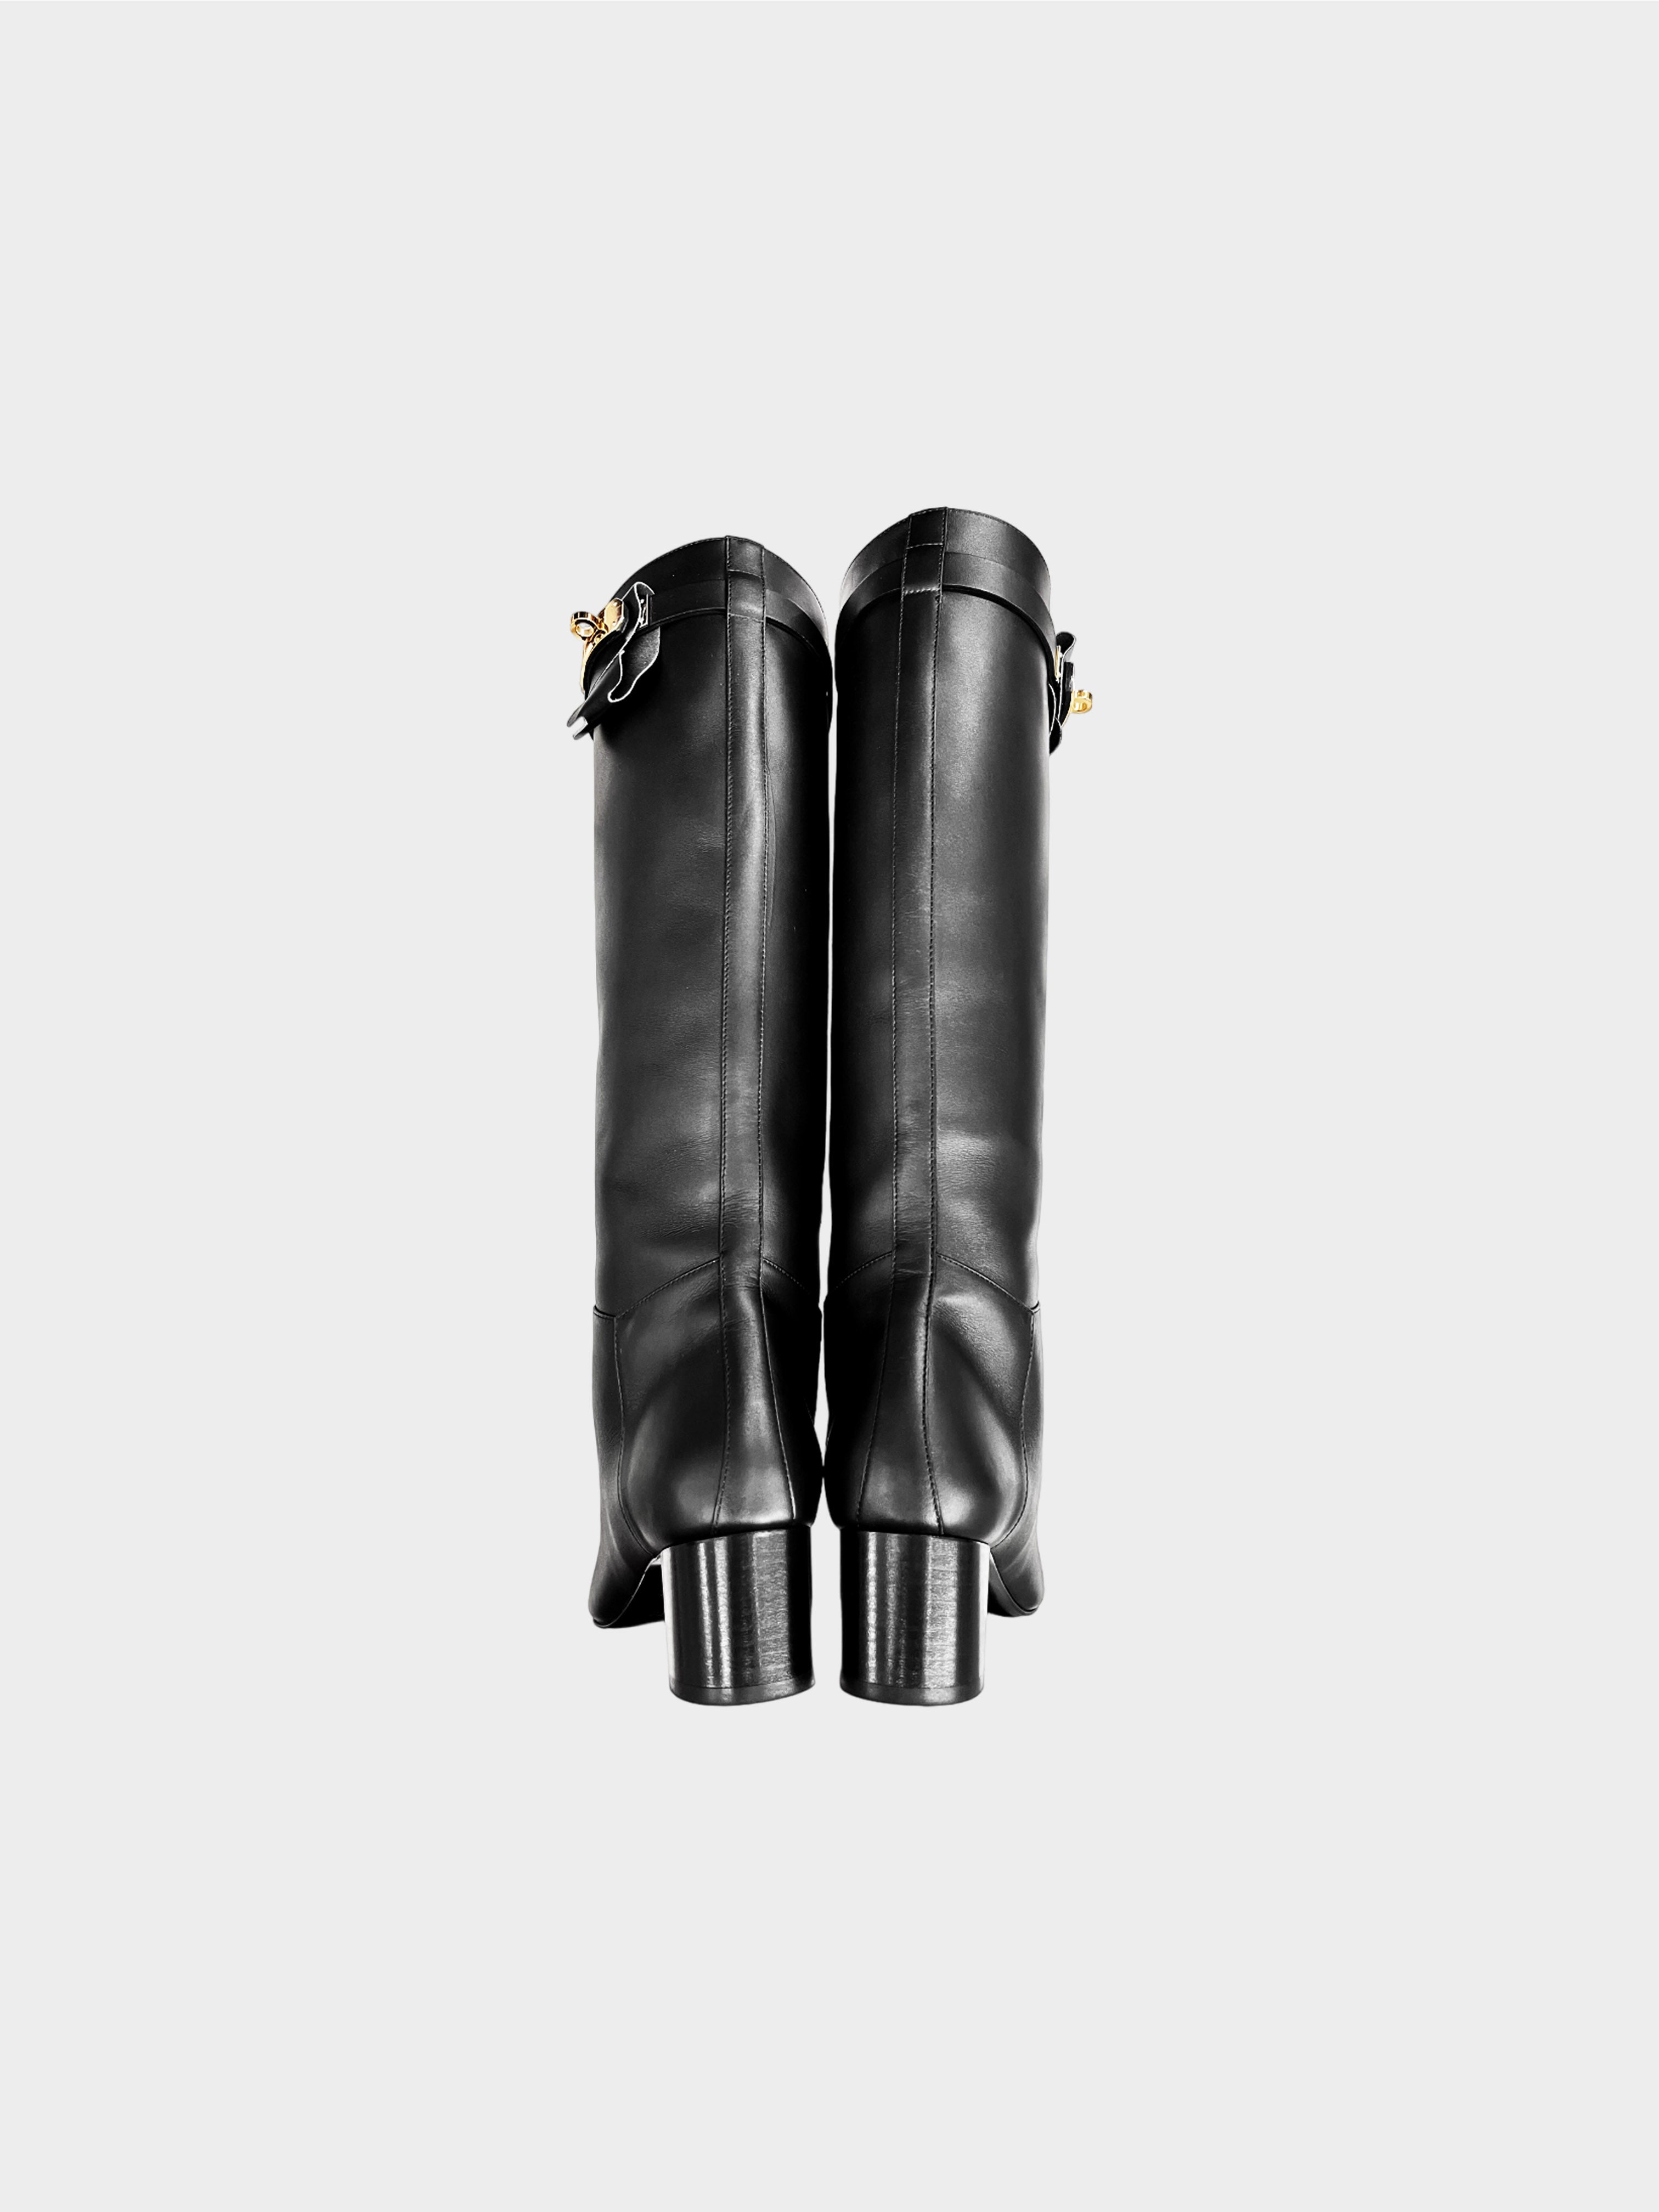 Hermès 2020s Black Calfskin Story 50 Boots